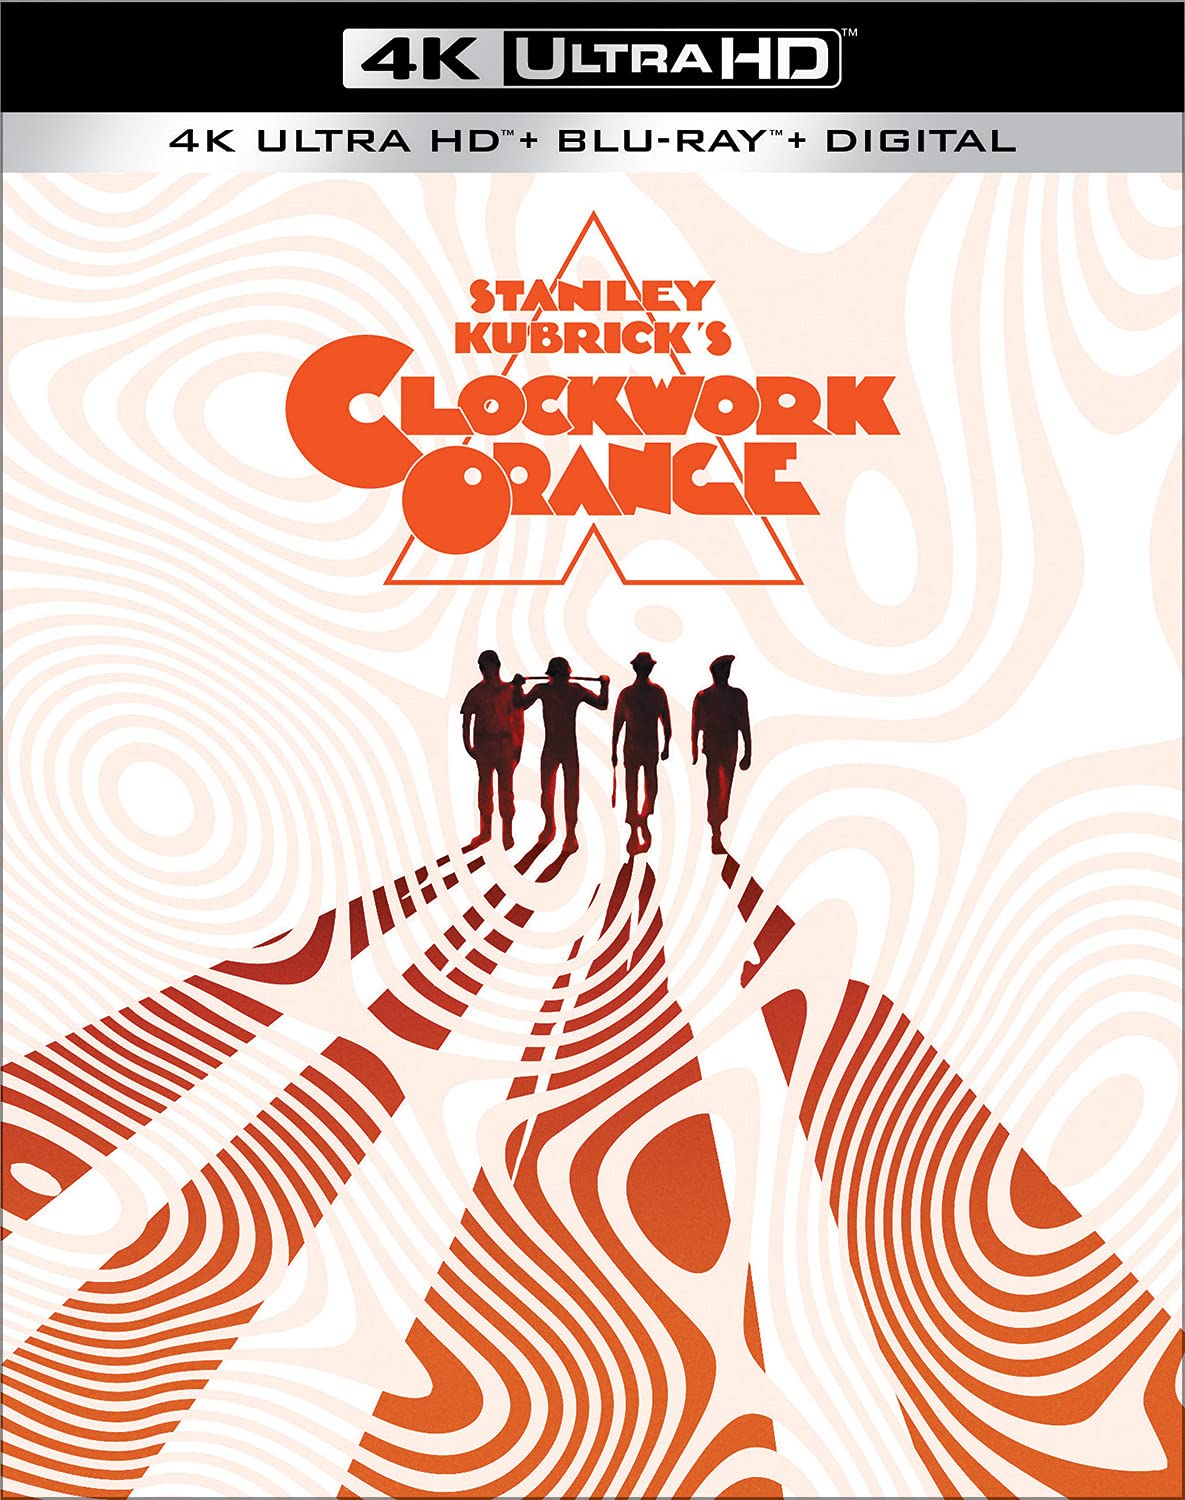 A Clockwork Orange DVD Release Date - A Clockwork Orange Book Release Date